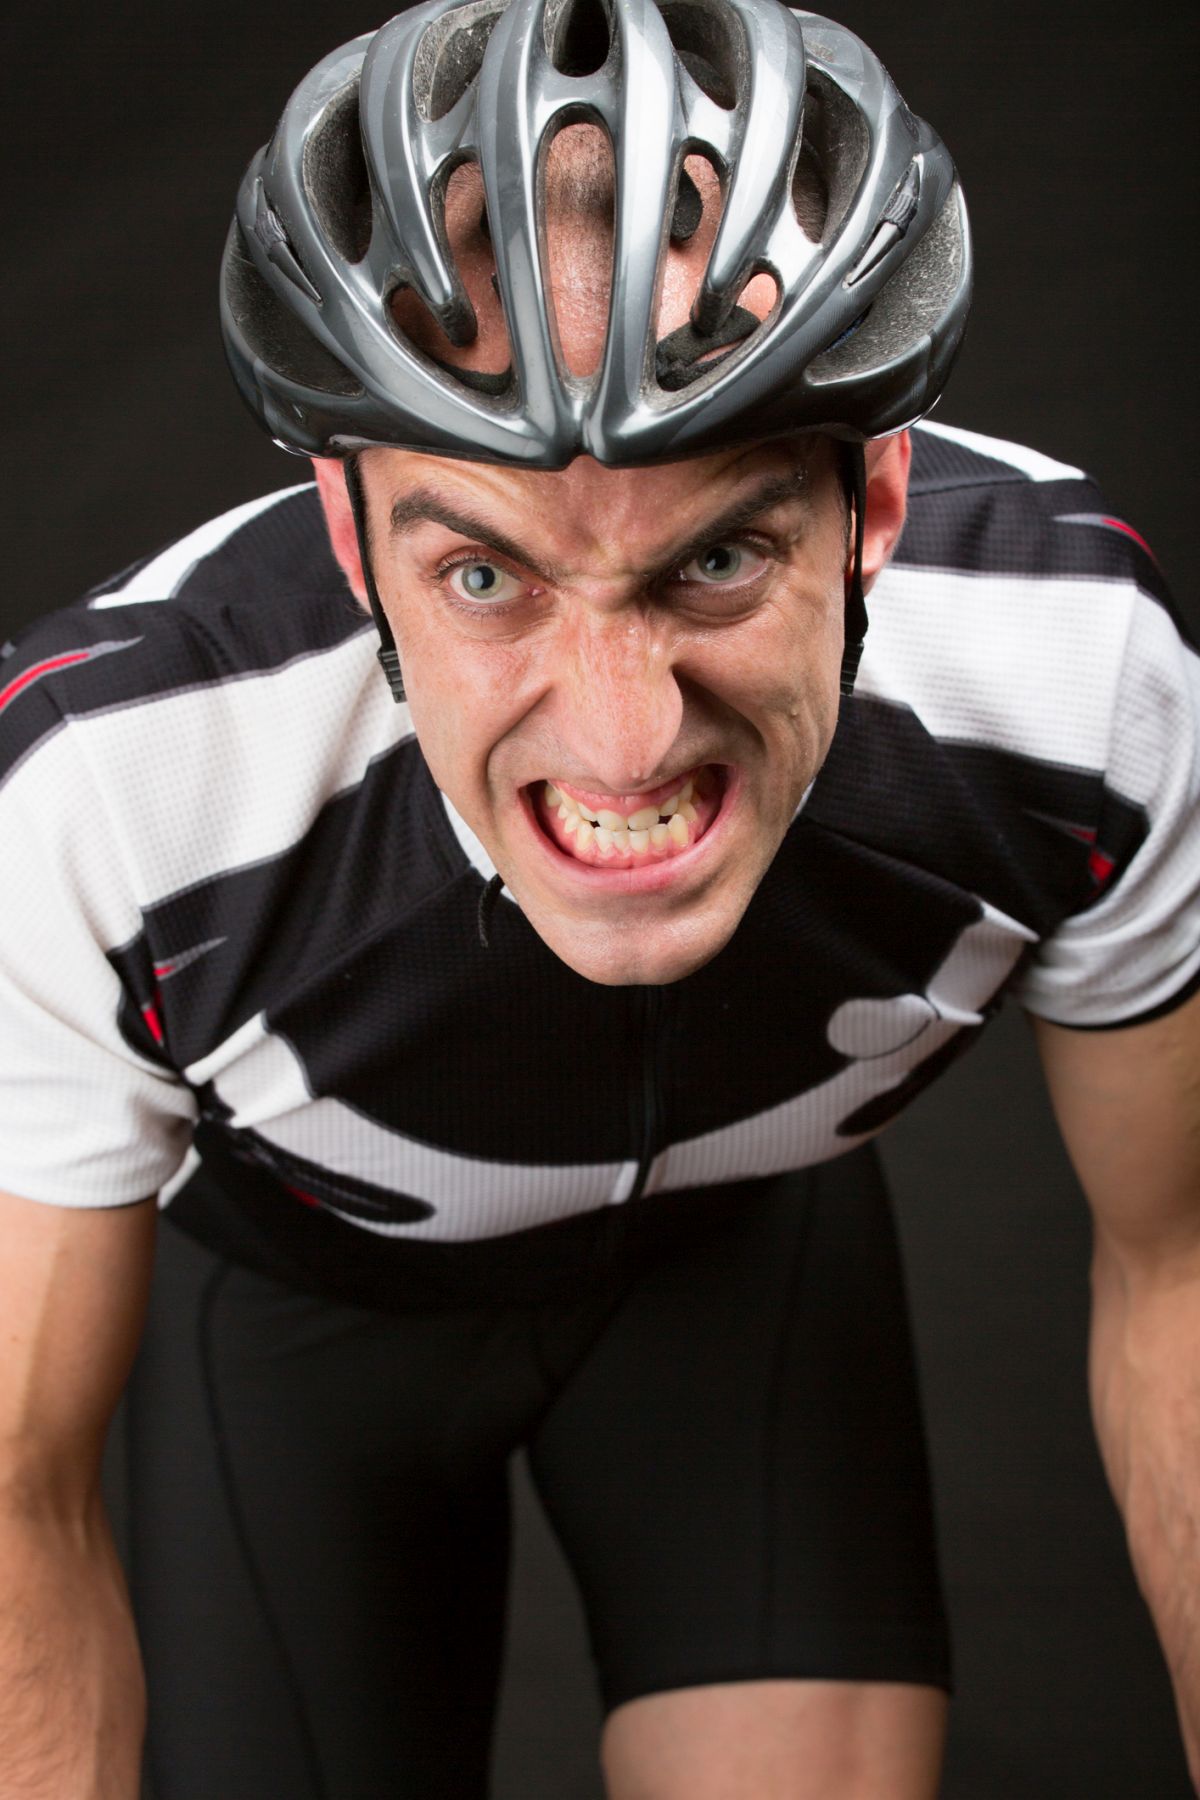 Swearing cyclist